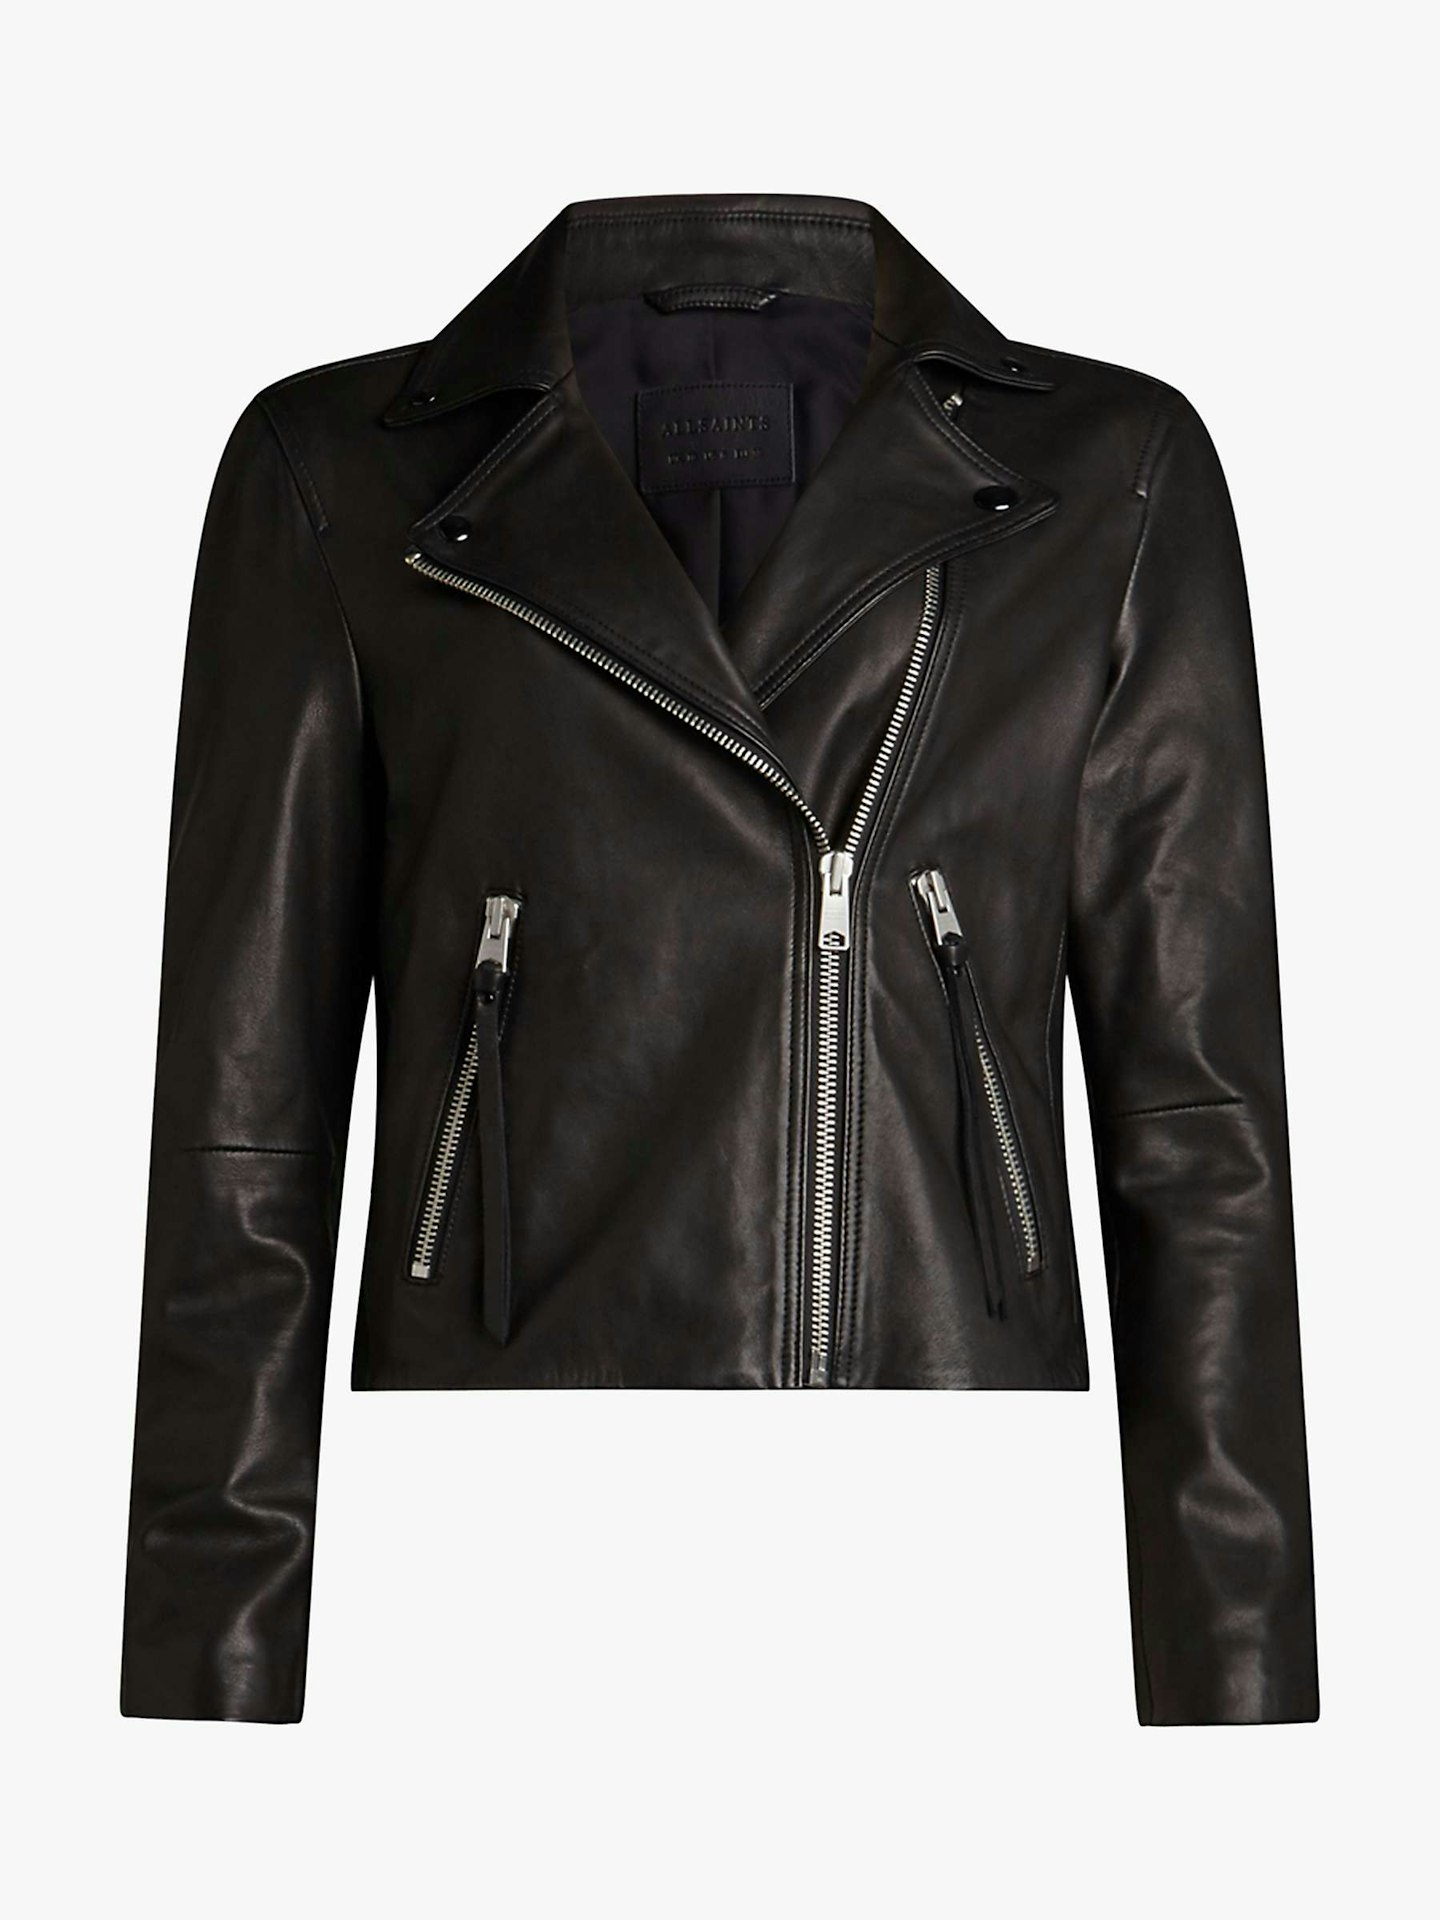 AllSaints, Dalby Leather Biker Jacket, £298 at John Lewis & Partners